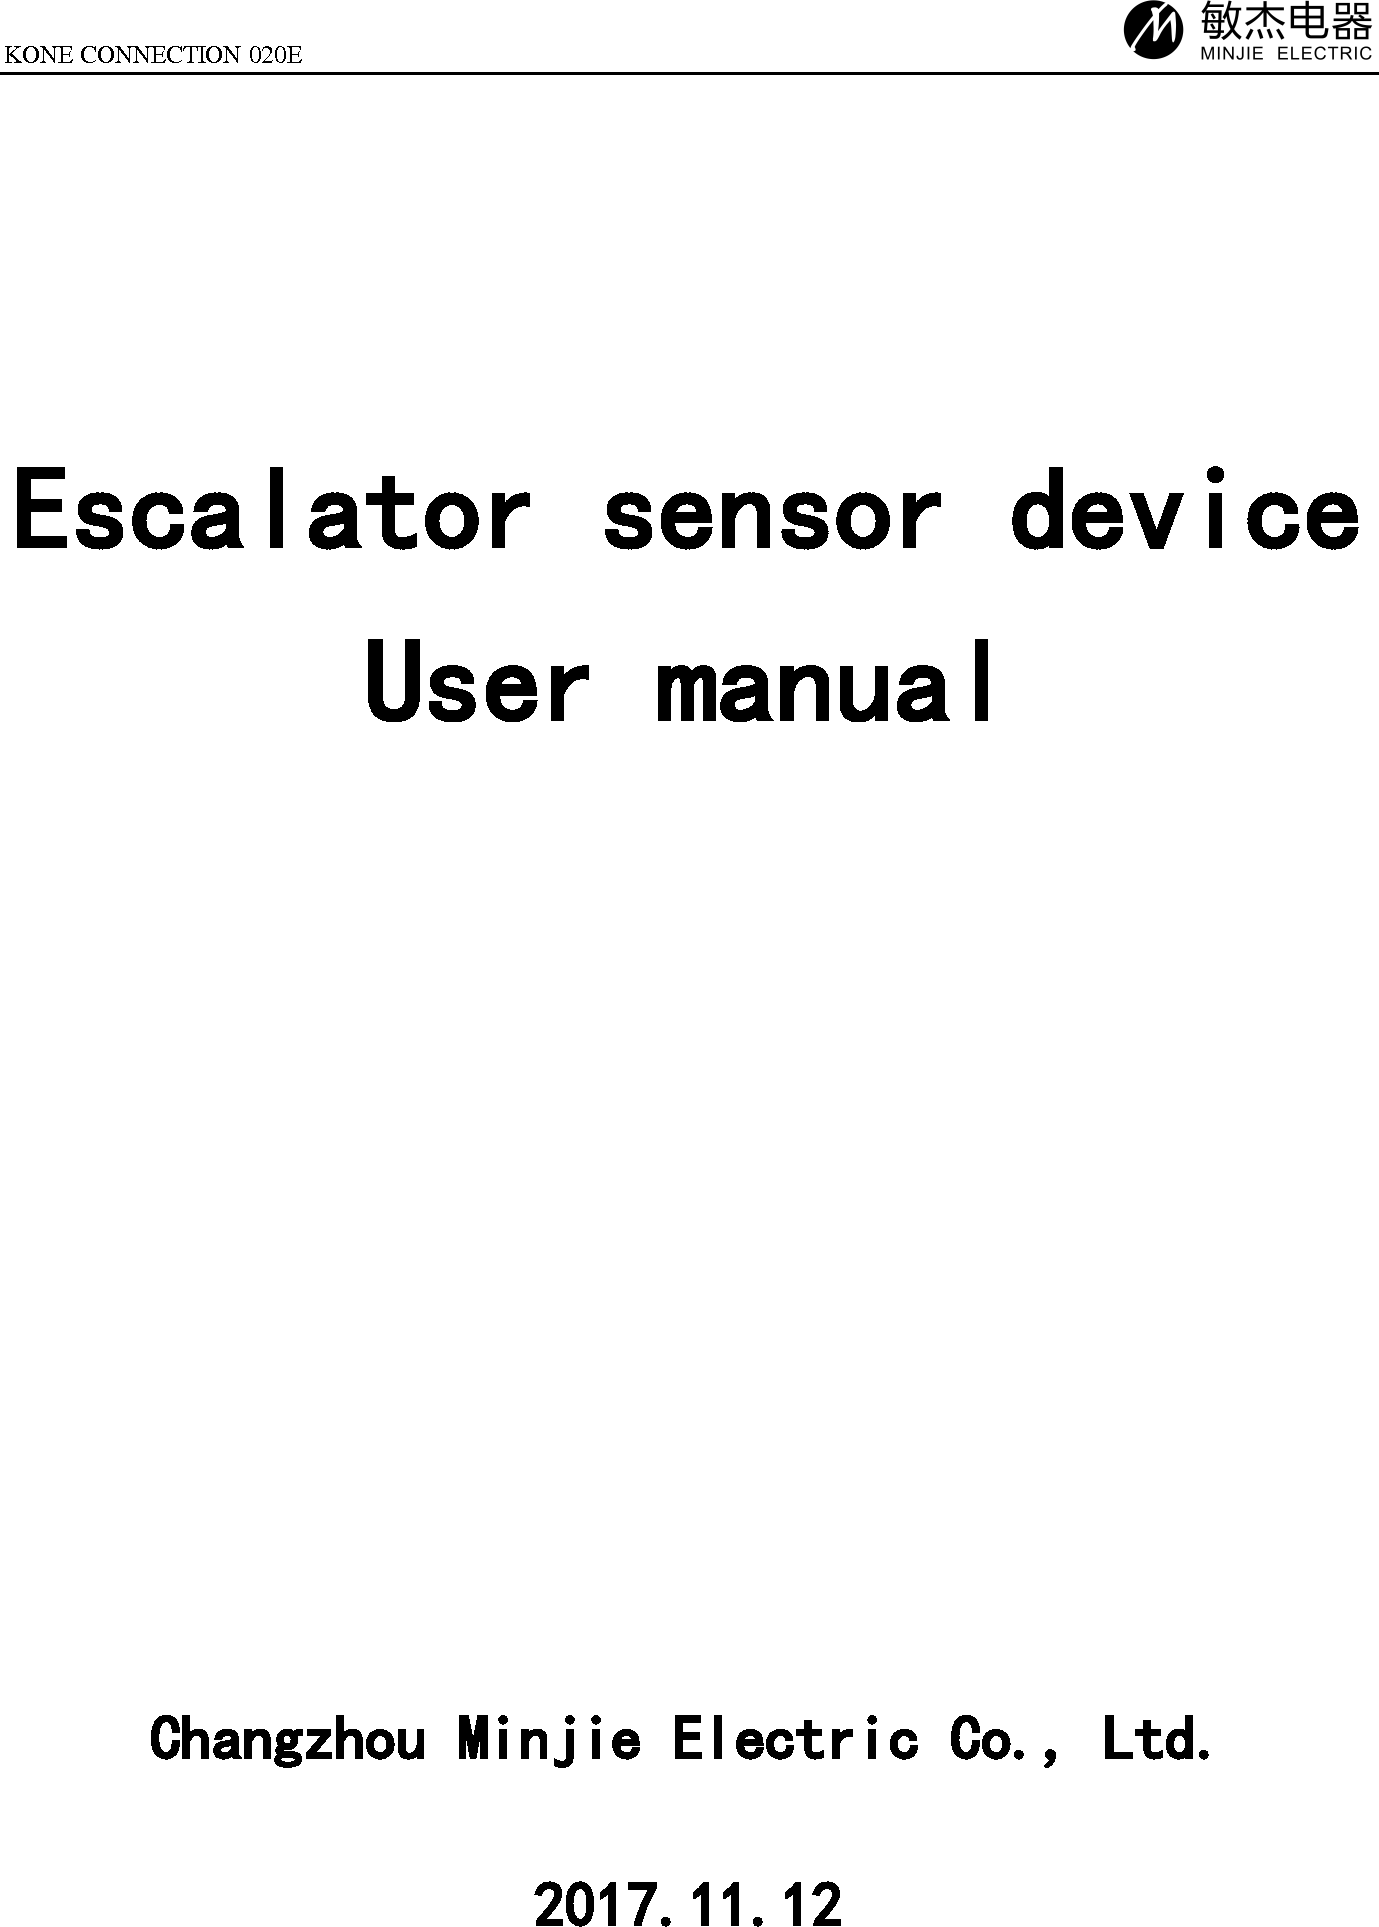 kone-51420705v06-kone-connection-020e-sensor-kit-user-manual